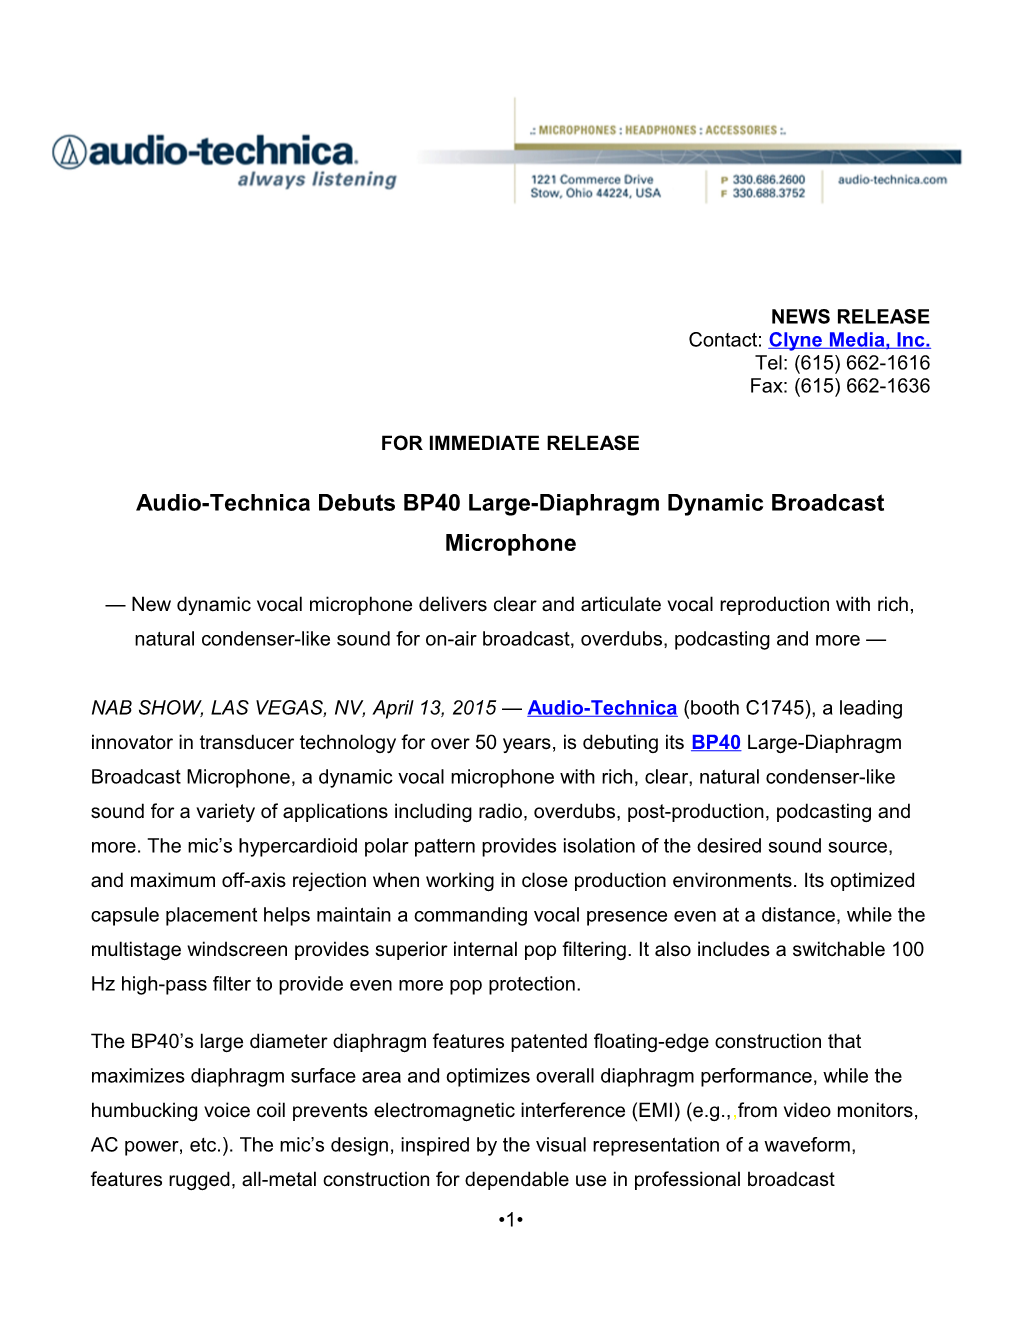 Audio-Technica Debuts BP40 Large-Diaphragm Dynamic Broadcast Microphone